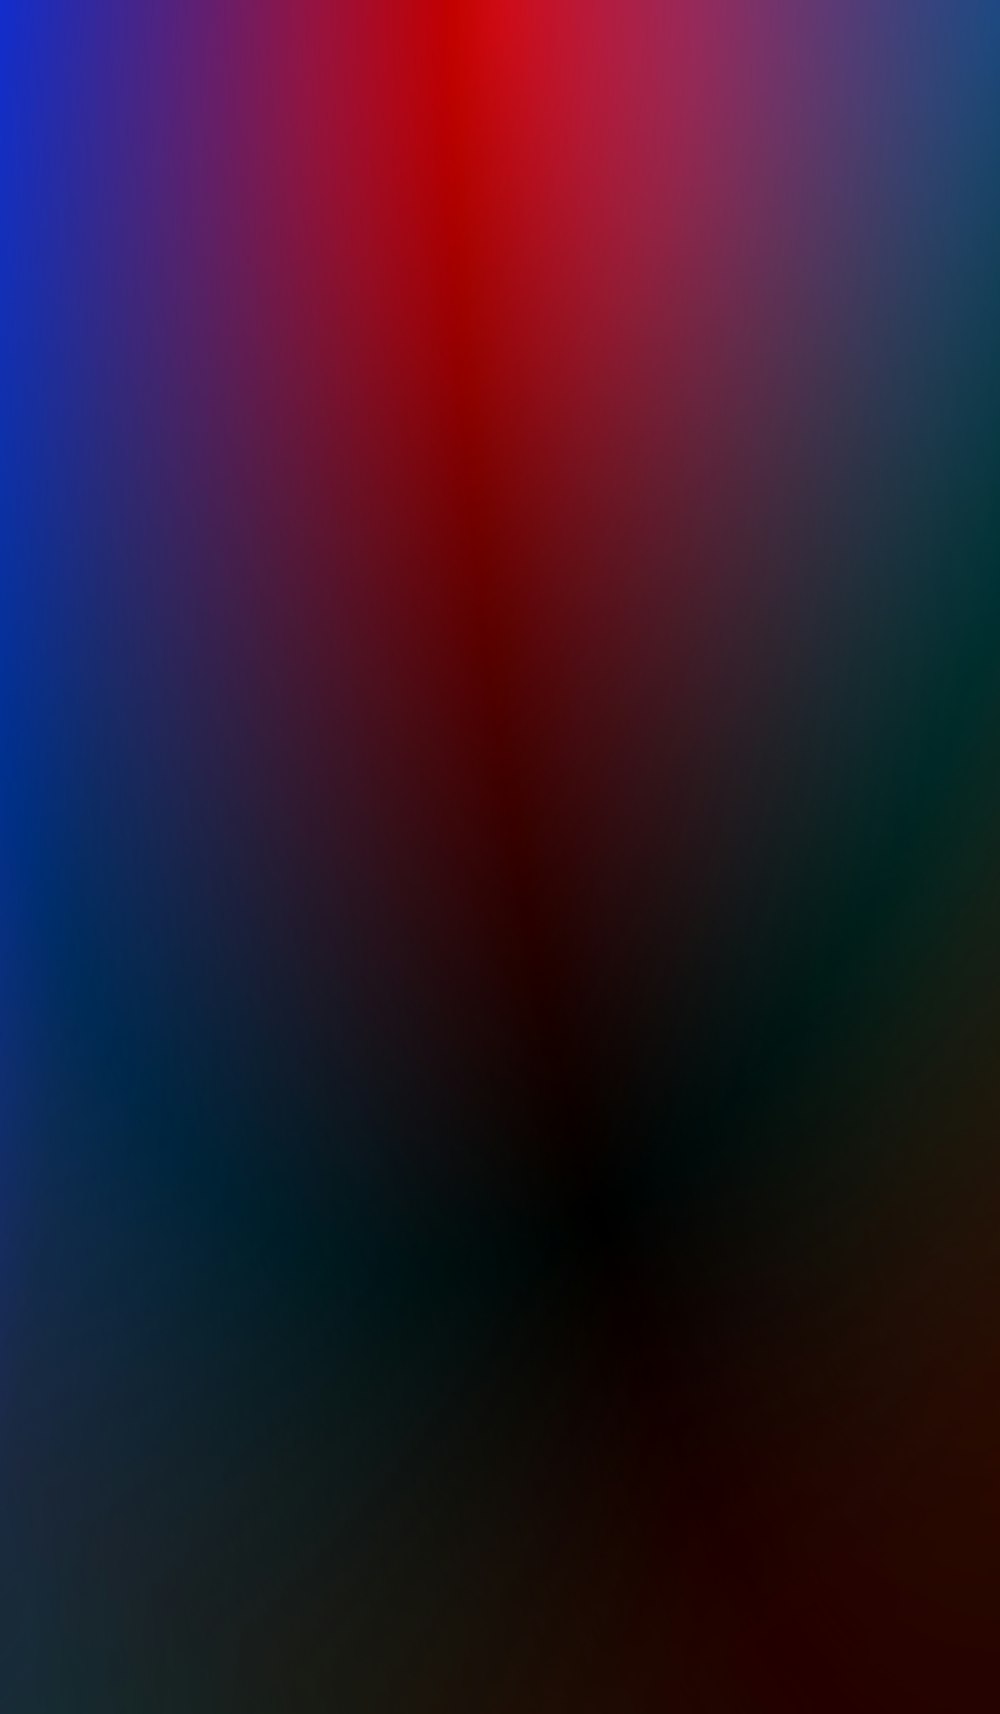 Red light on blue background photo – Free Blue Image on Unsplash